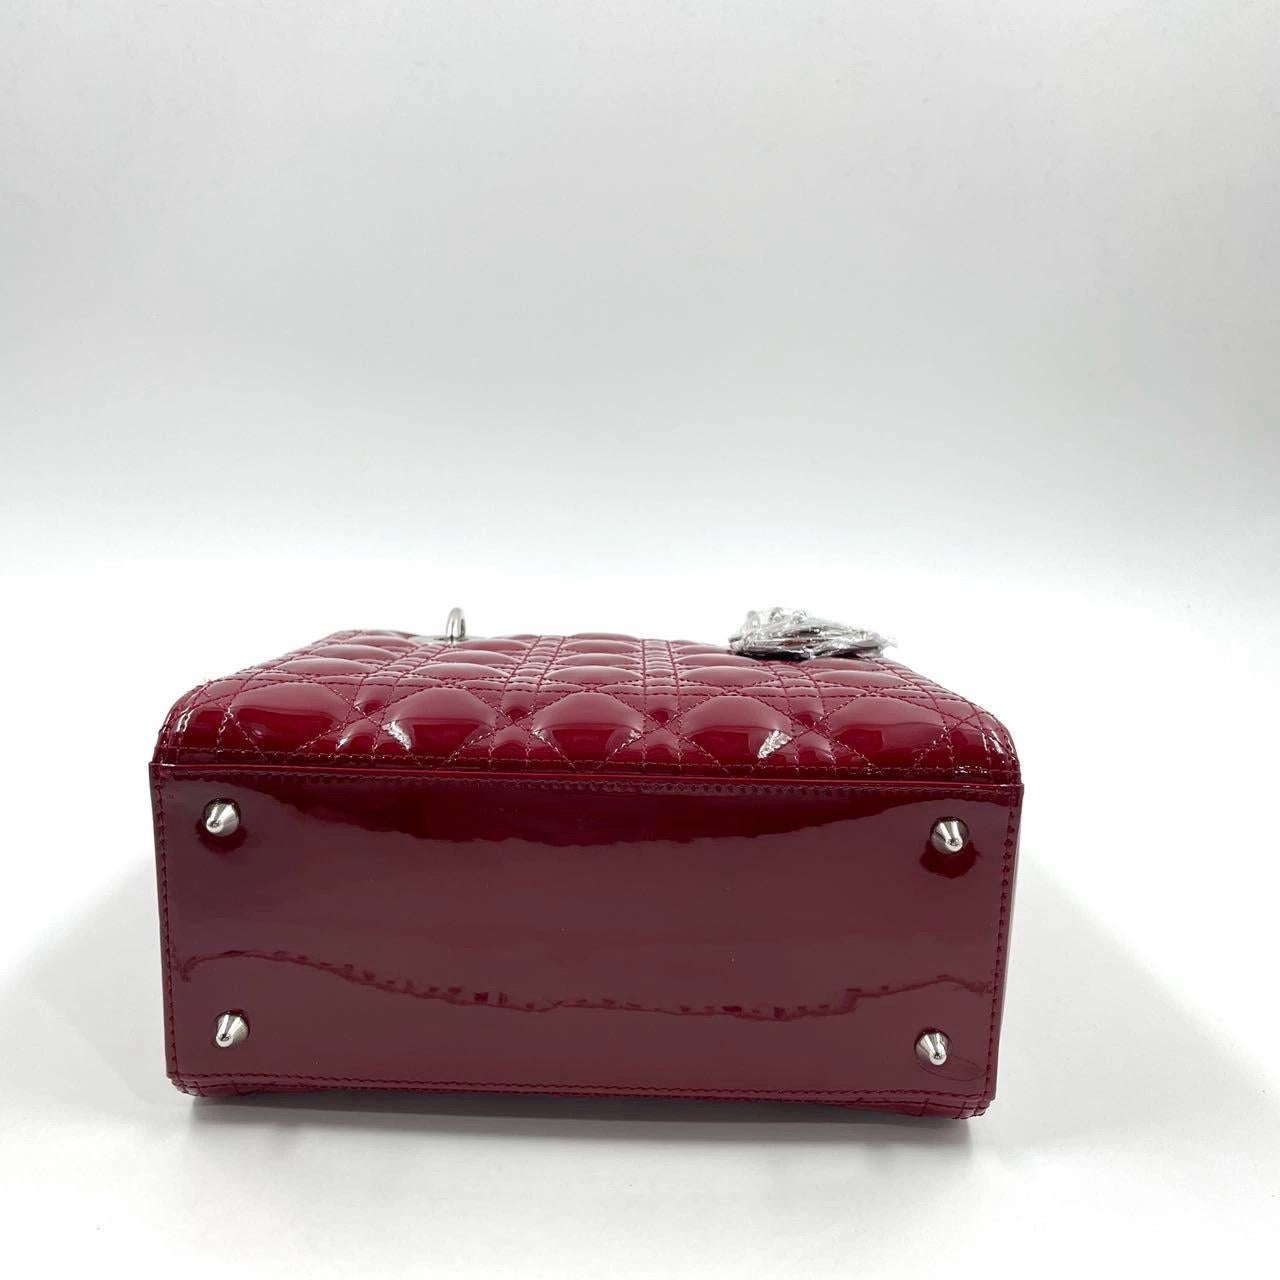 Lady Dior 2017 Medium Burgundy Patent Leather Handbag Adjustable Strap For Sale 3